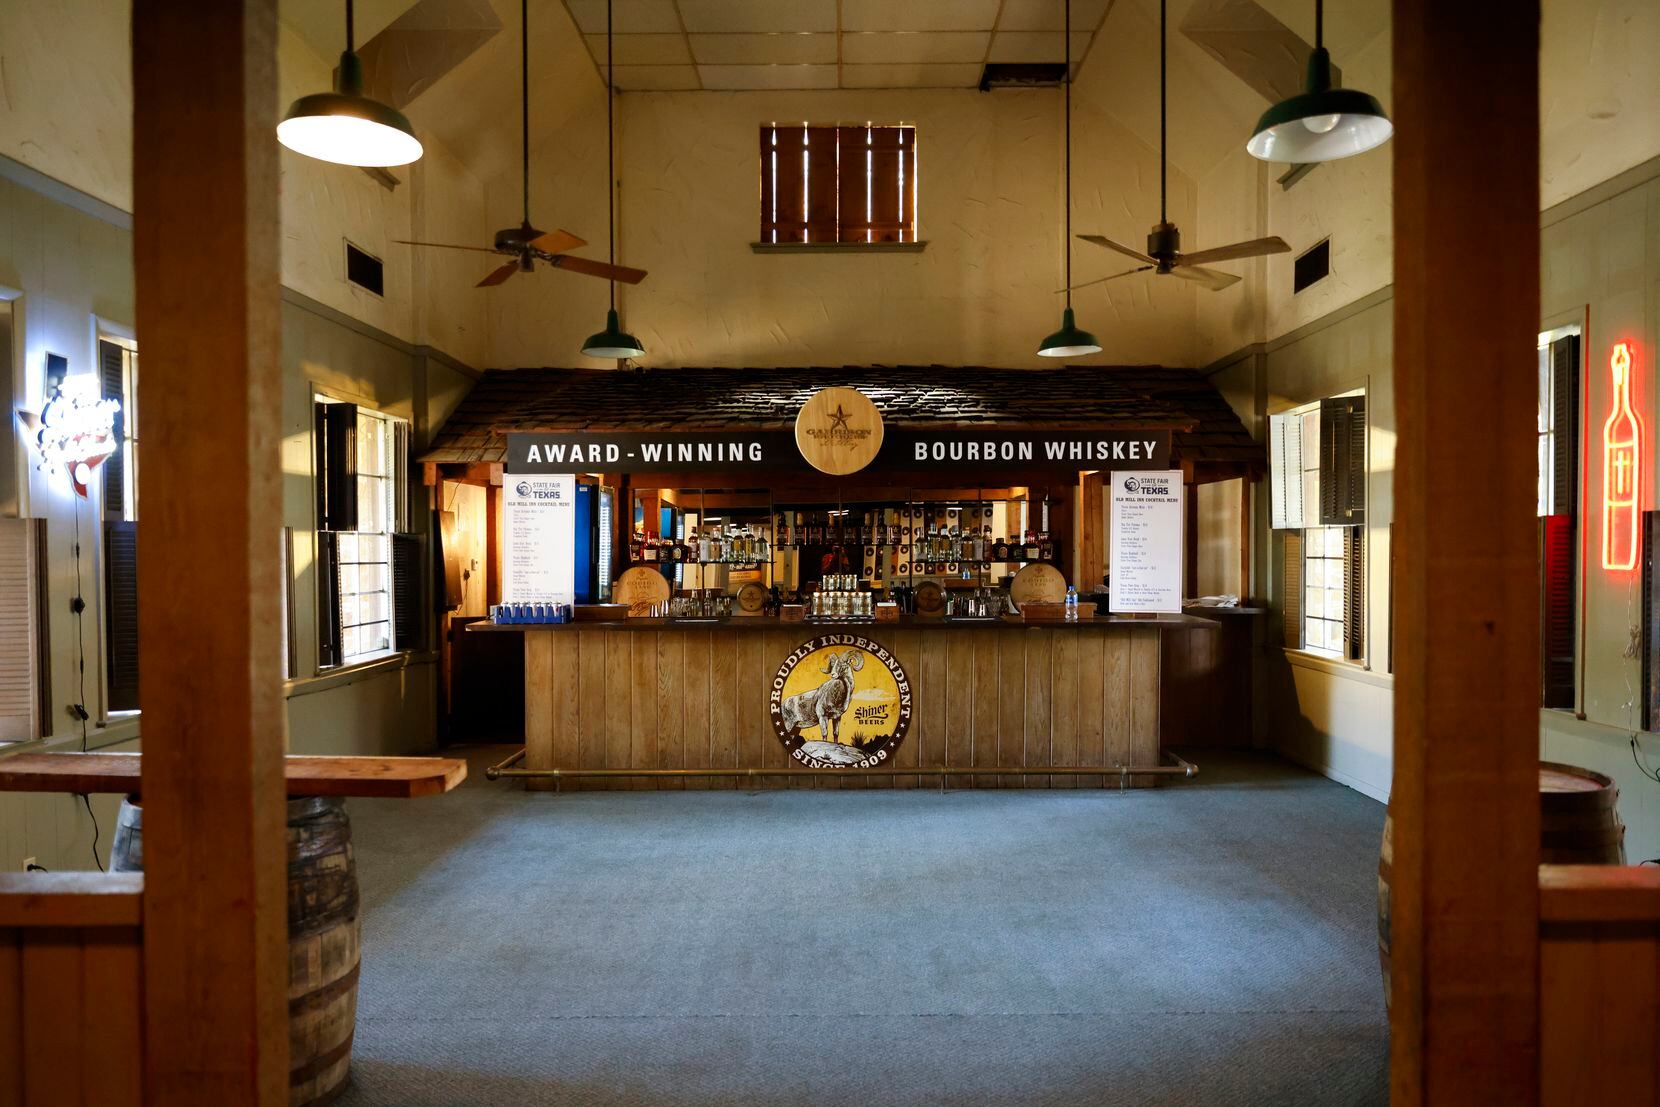 The bar inside Old Mill Inn is a rare spot on the fairgrounds selling liquor.